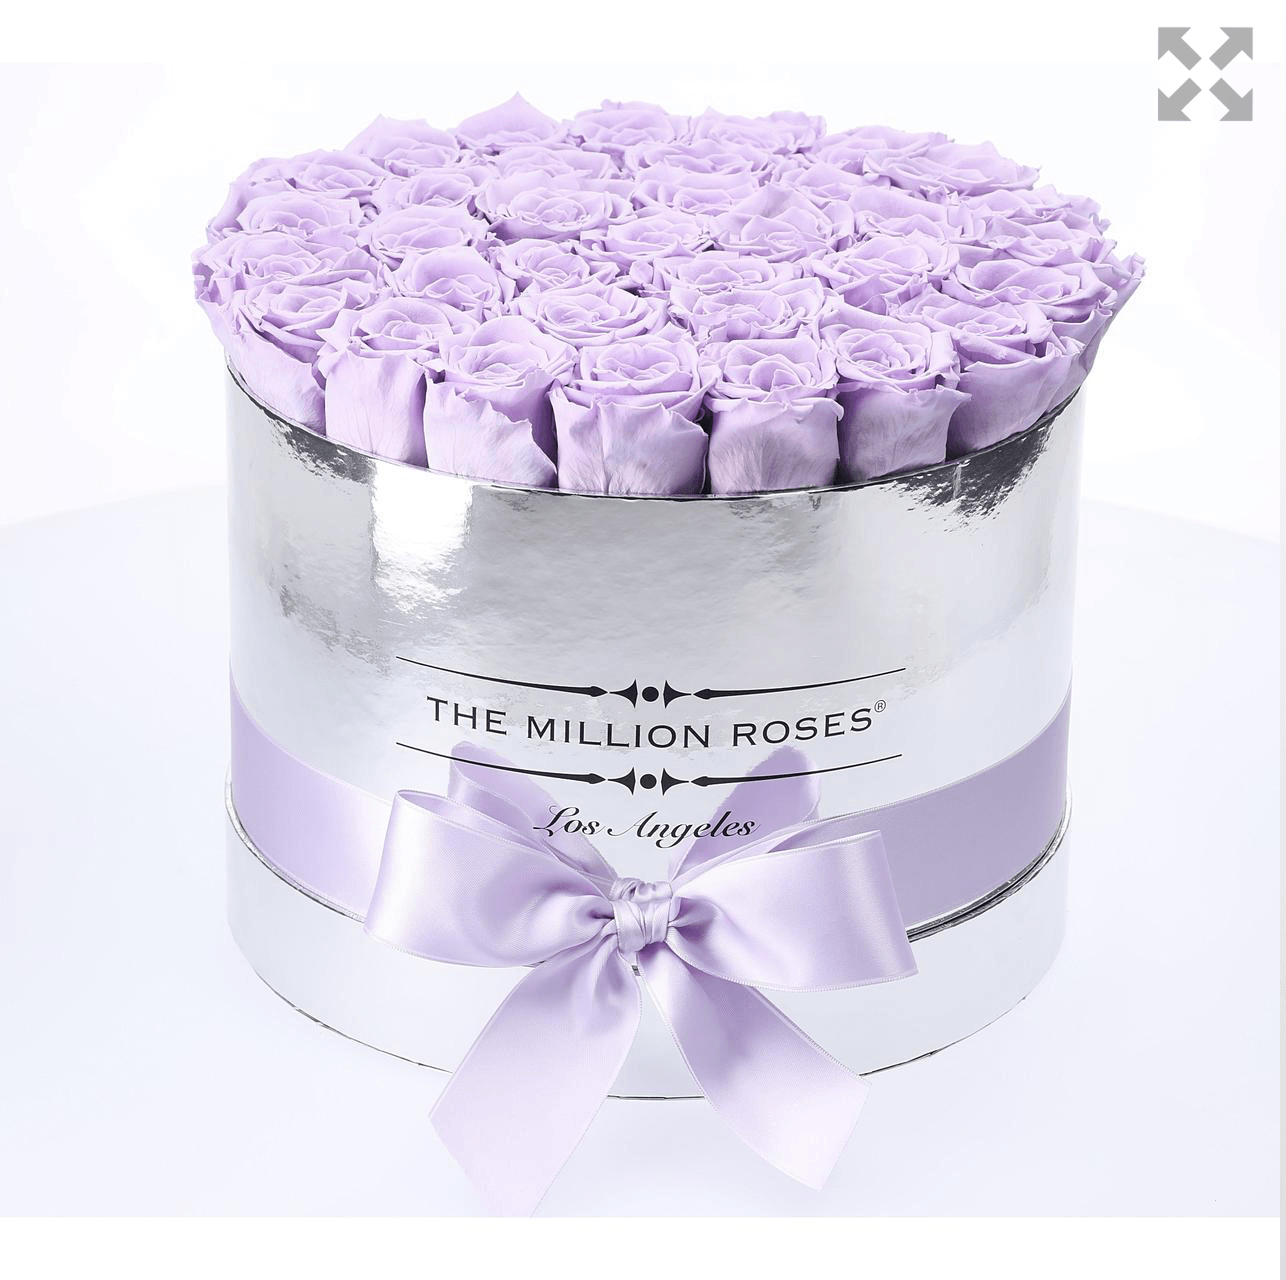 the million medium box - mirror-silver - lavender ETERNITY roses lavender eternity roses - the million roses